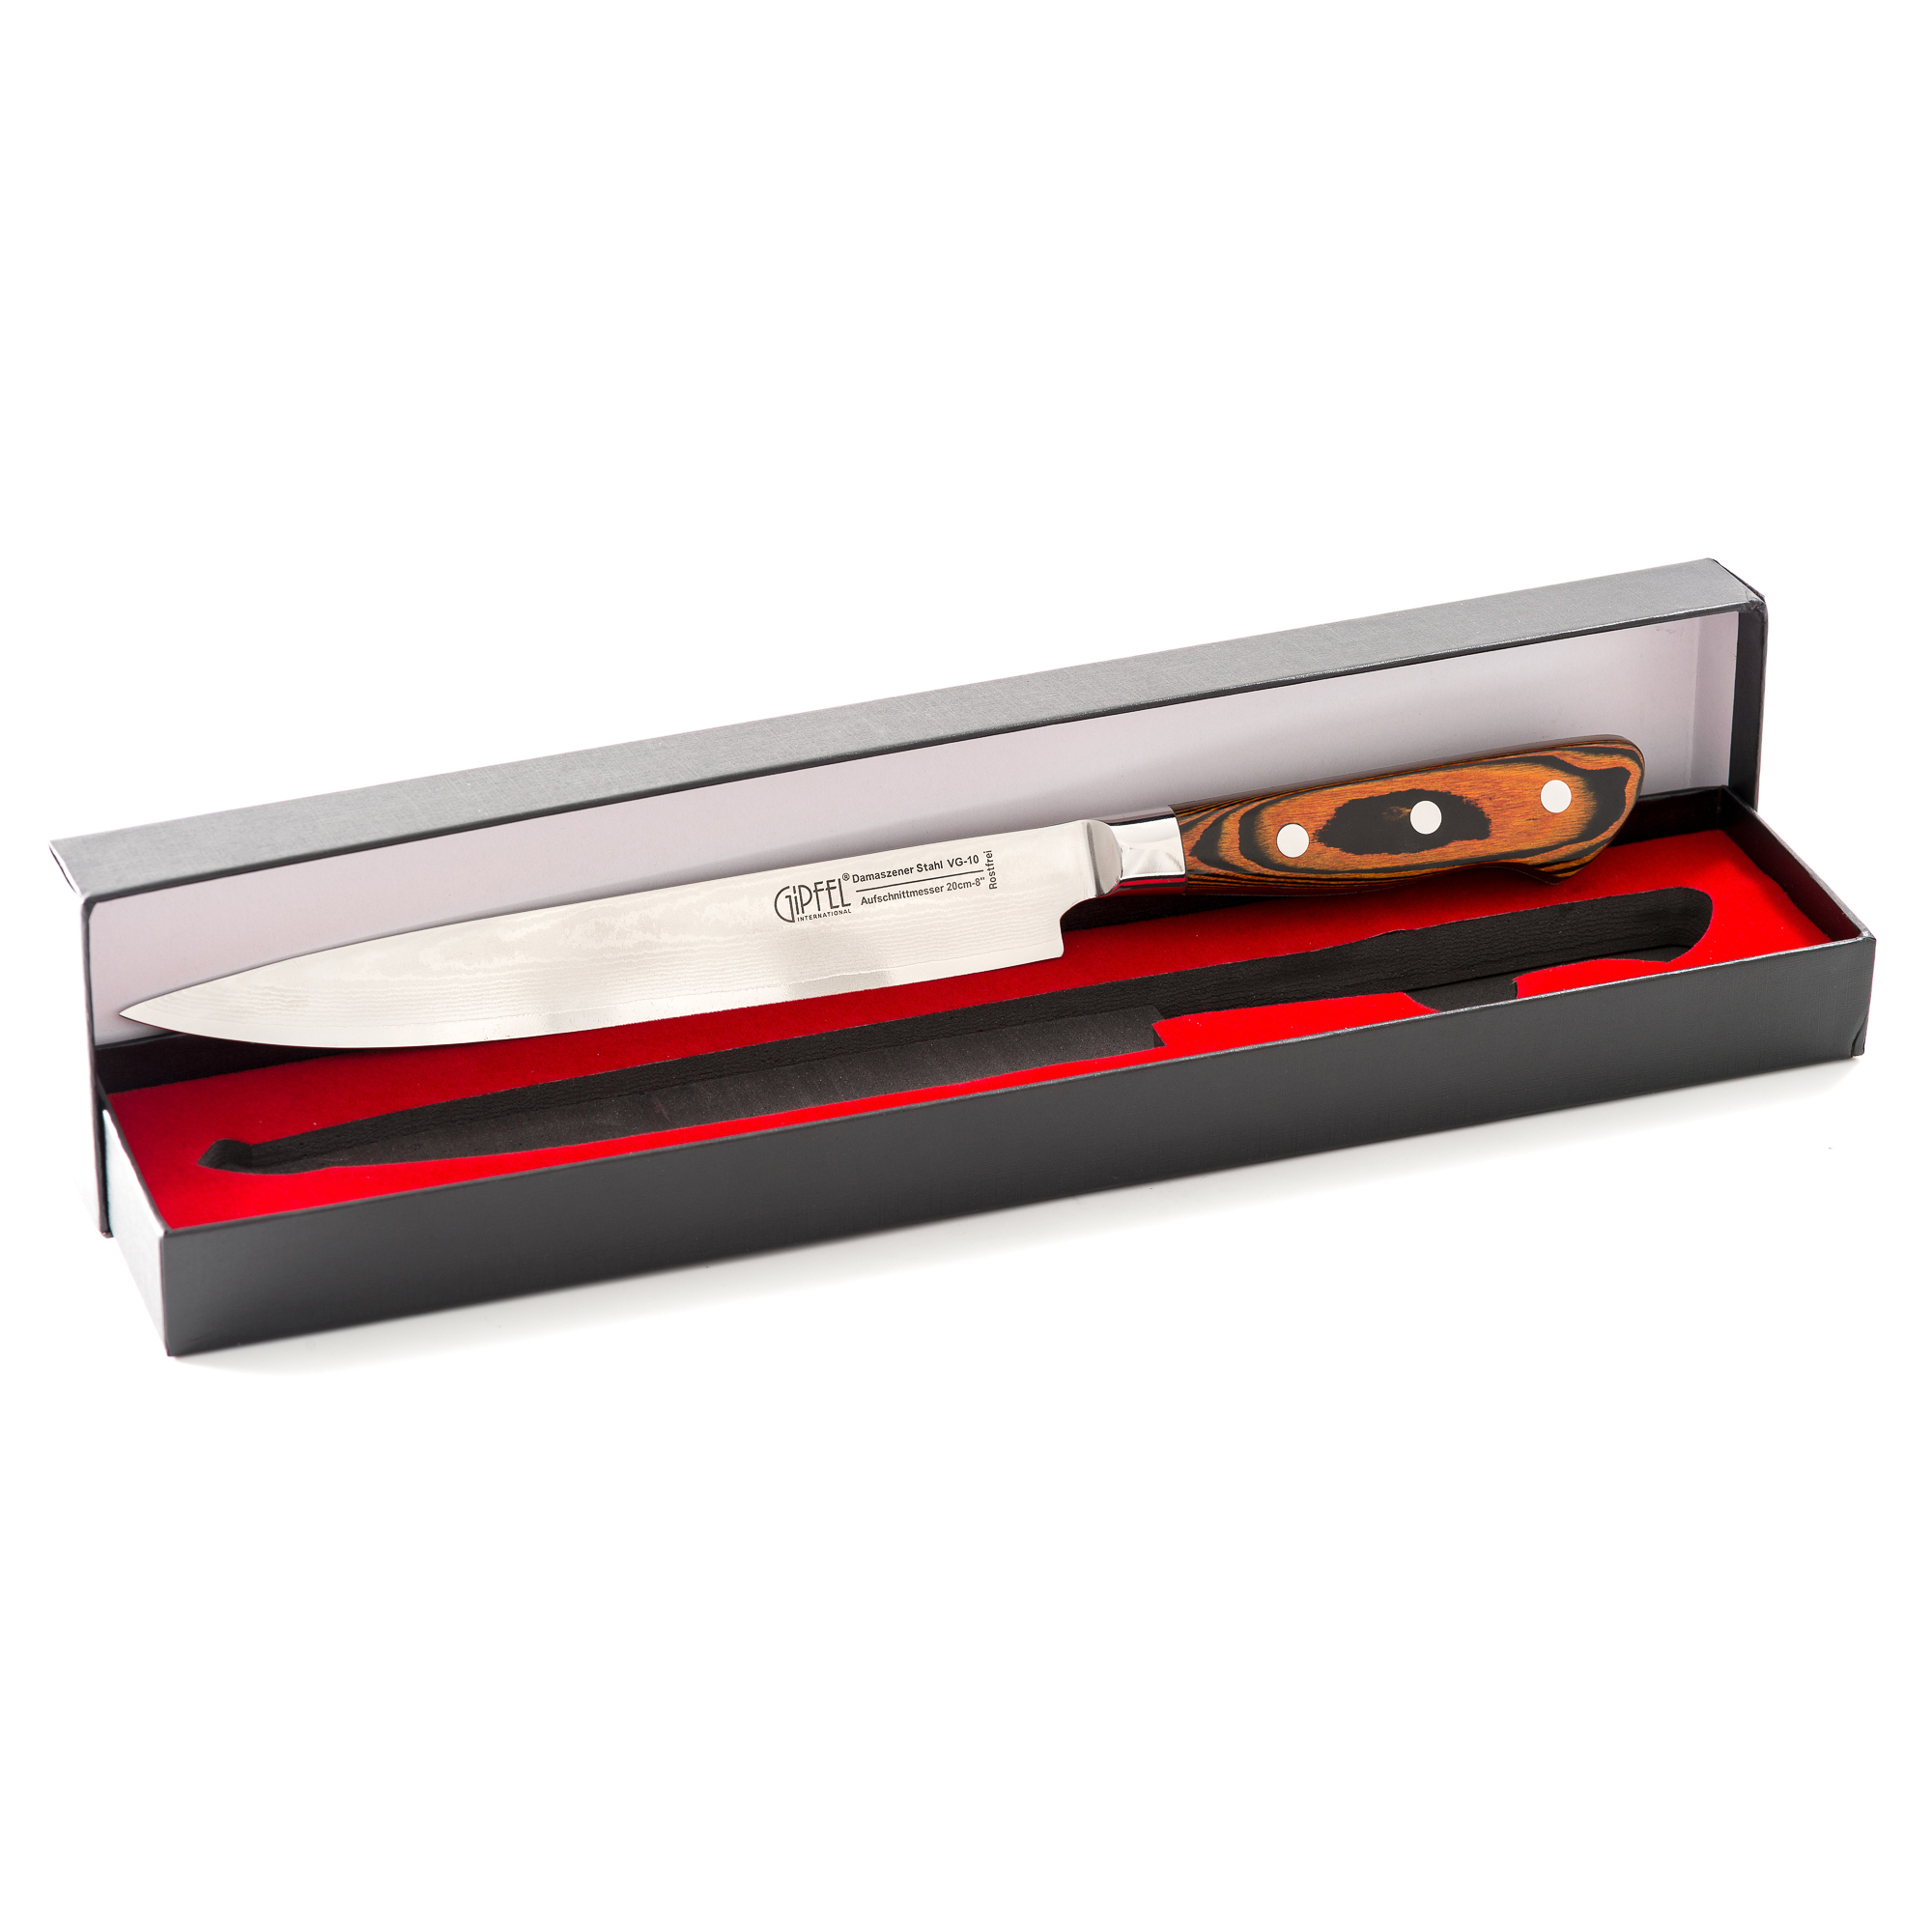 Нож для мяса слайсер Kyoto Gipfel нож для мяса слайсер kyoto gipfel